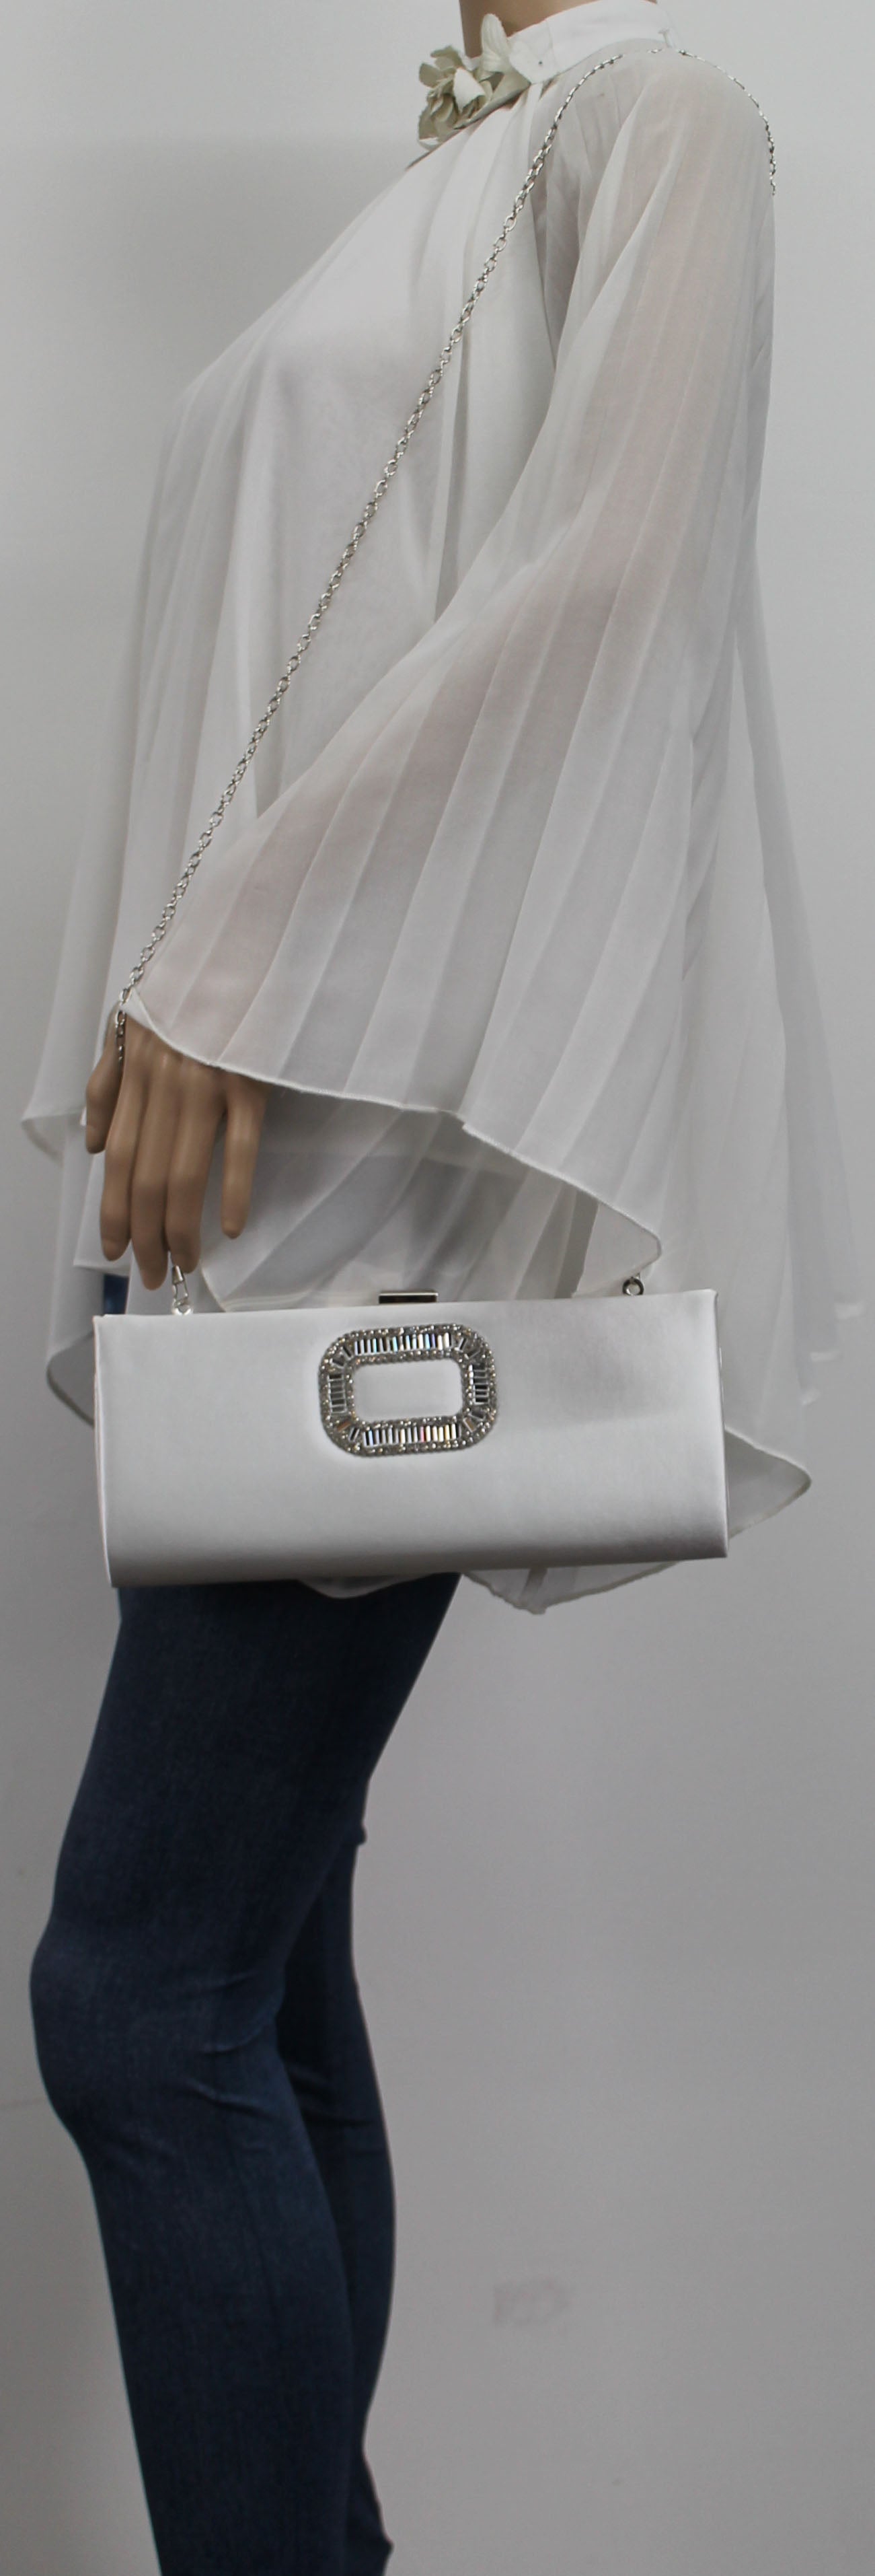 SWANKYSWANS Kerr Satin Clutch Bag Ivory Cute Cheap Clutch Bag For Weddings School and Work